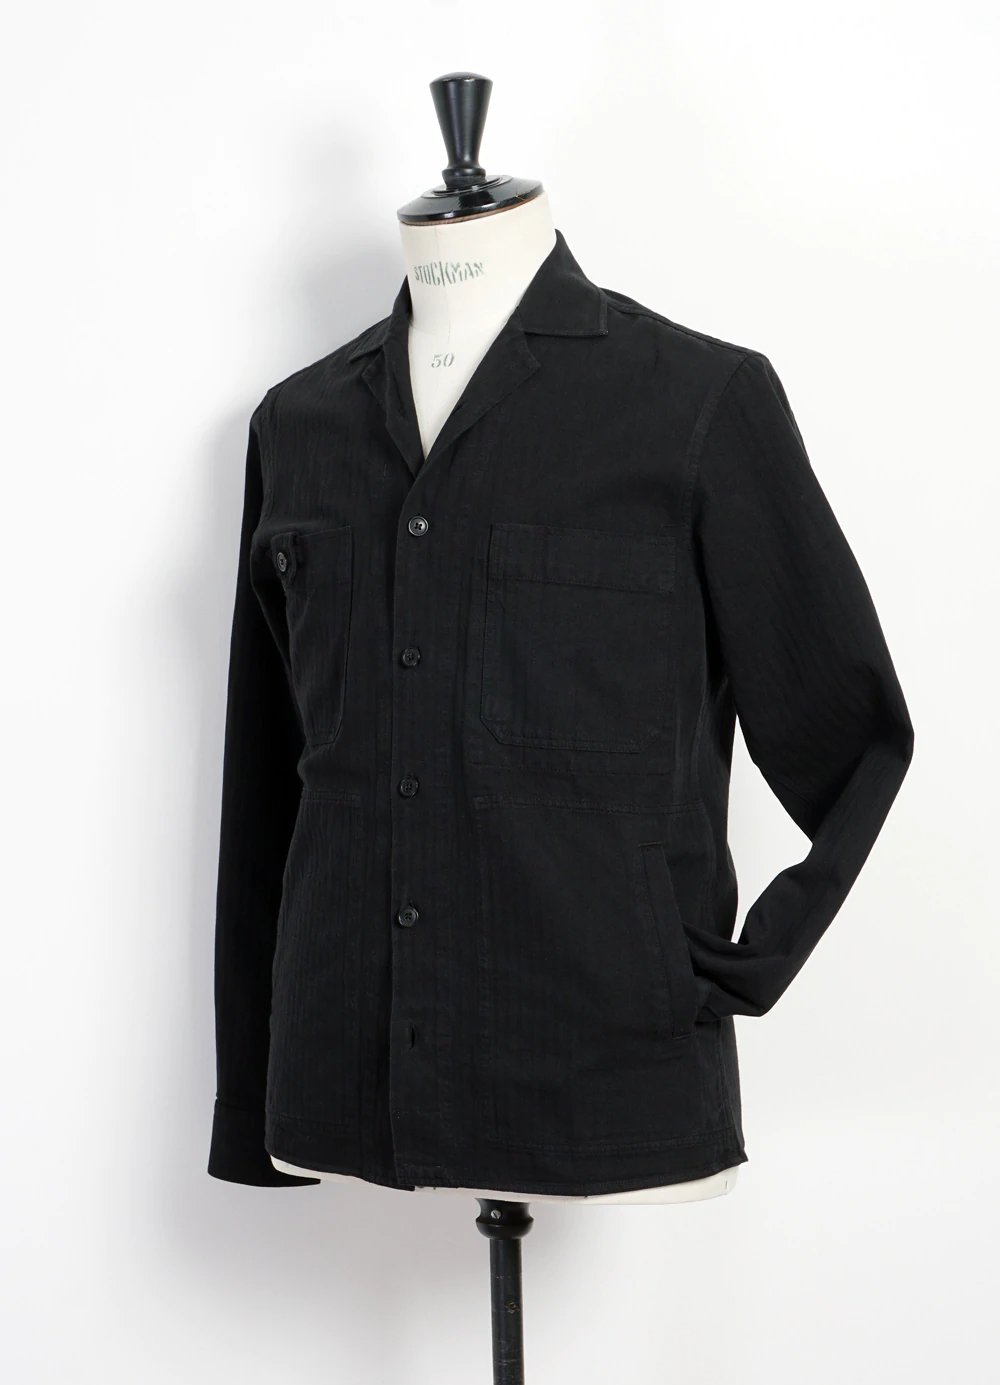 Hansen Garments SAM | Casual Over Shirt | black